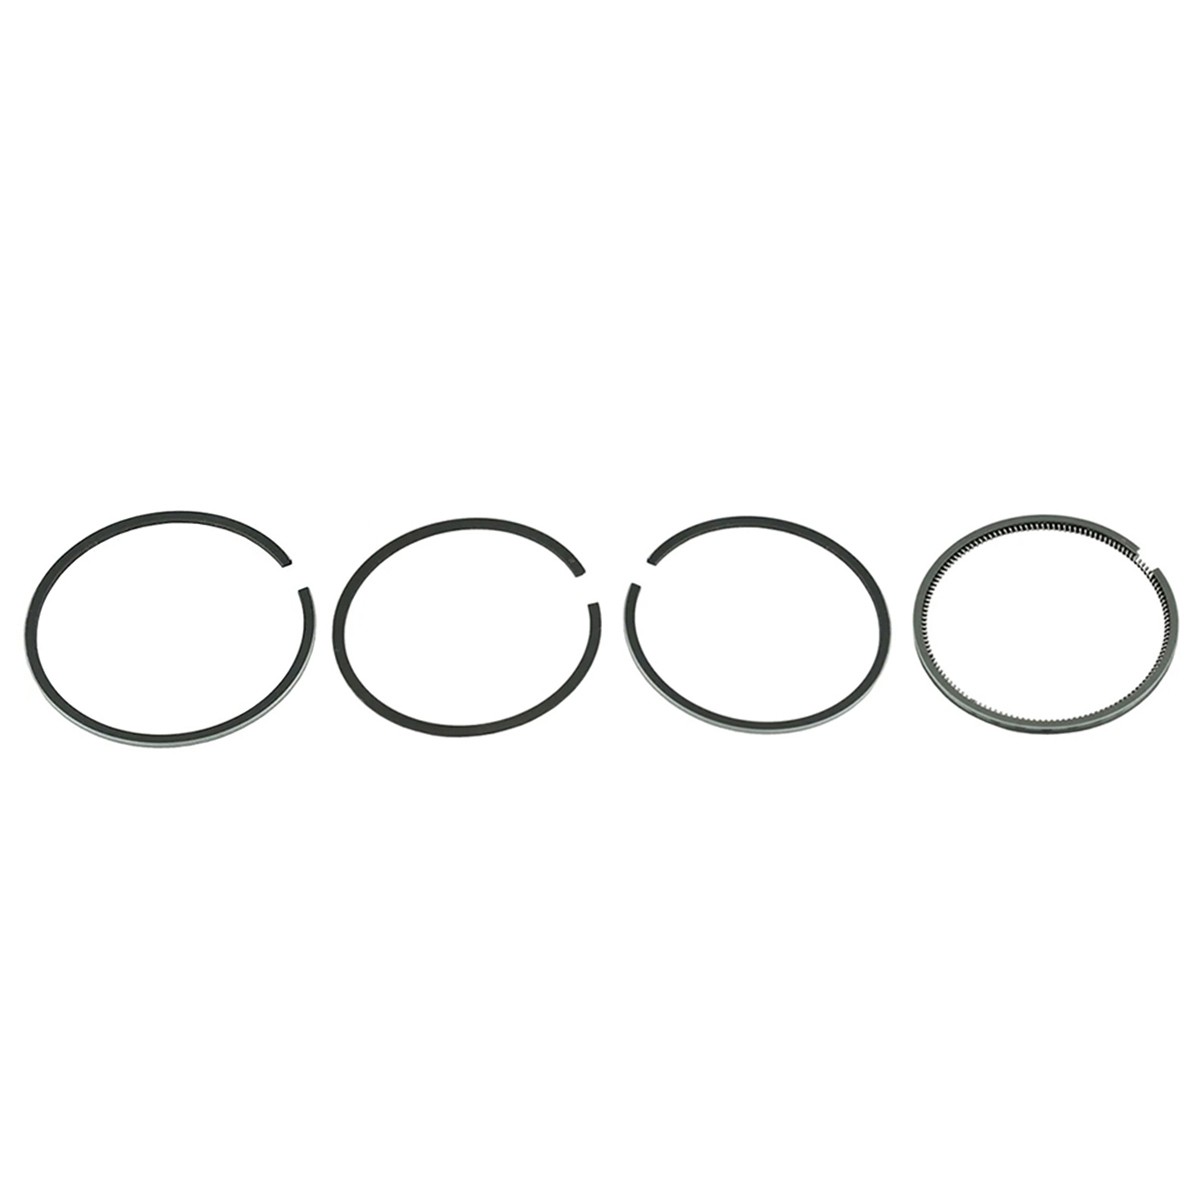 Piston rings / Ø 95 mm / 2.50 x 2.00 x 2.00 x 4.50 mm / Toyosha S135 / Hinomoto E25/E250 / 2701-3110-000 / 8-26-100-02